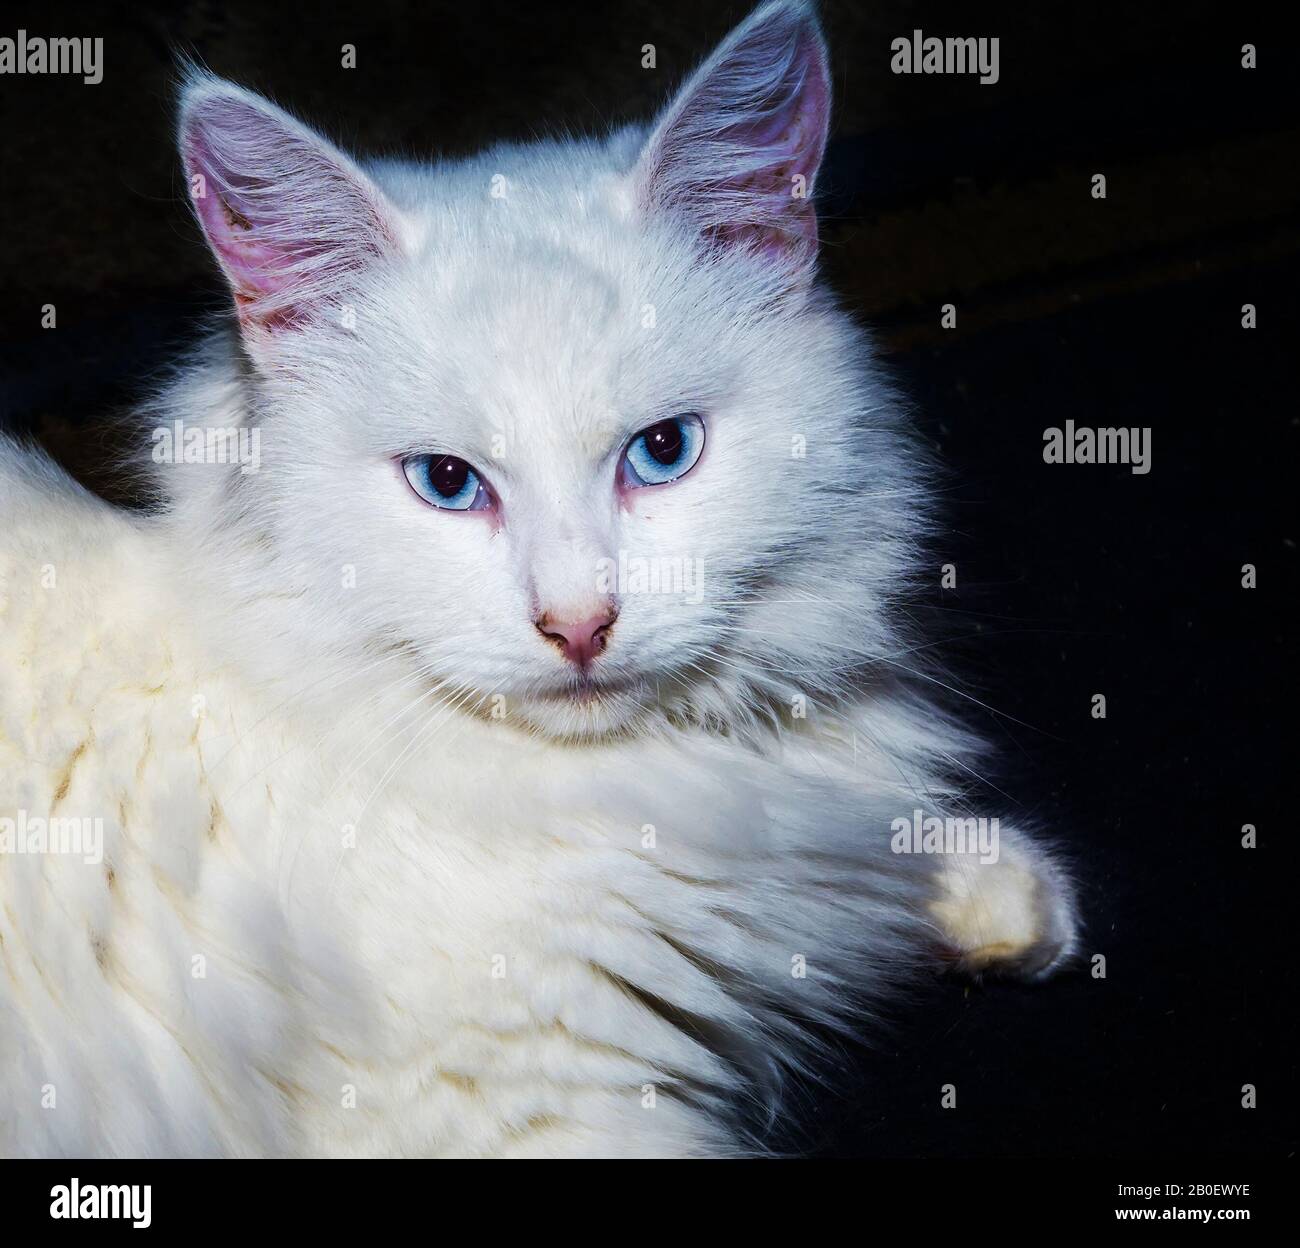 Cute fluffy white turkish angora cat with blue eyes. Stock Photo